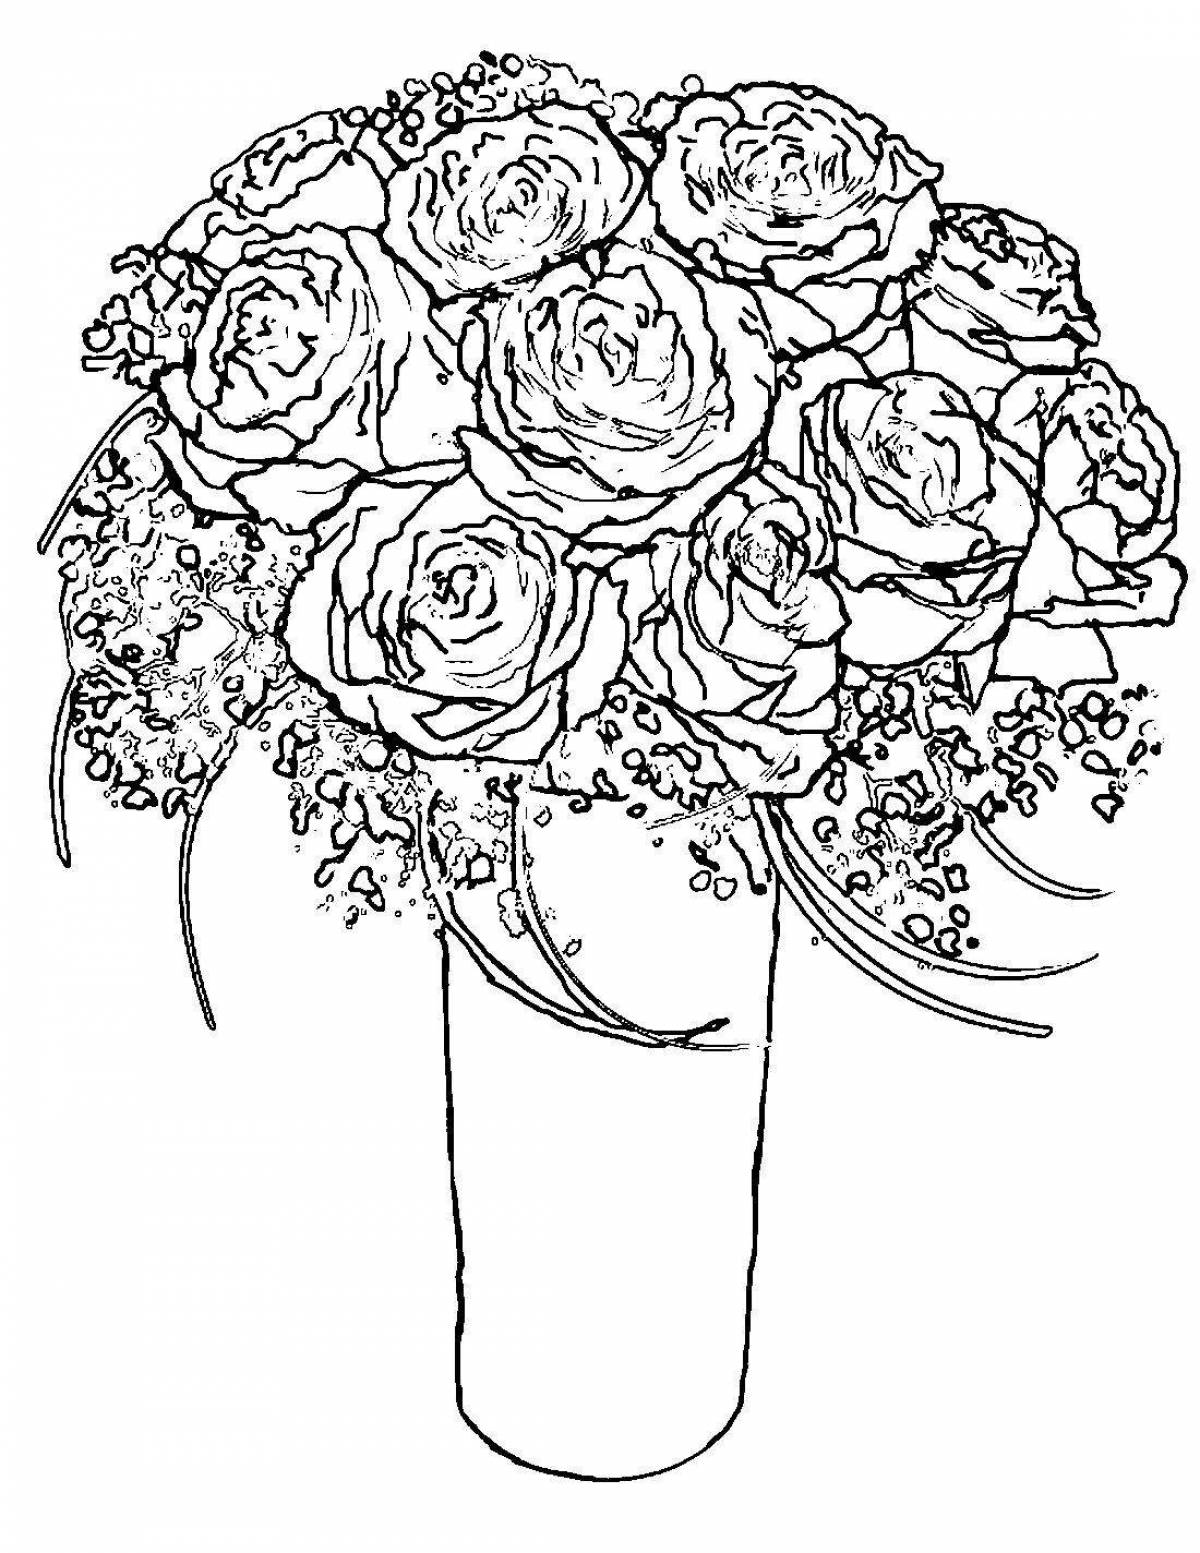 Ornate rose in a vase coloring book